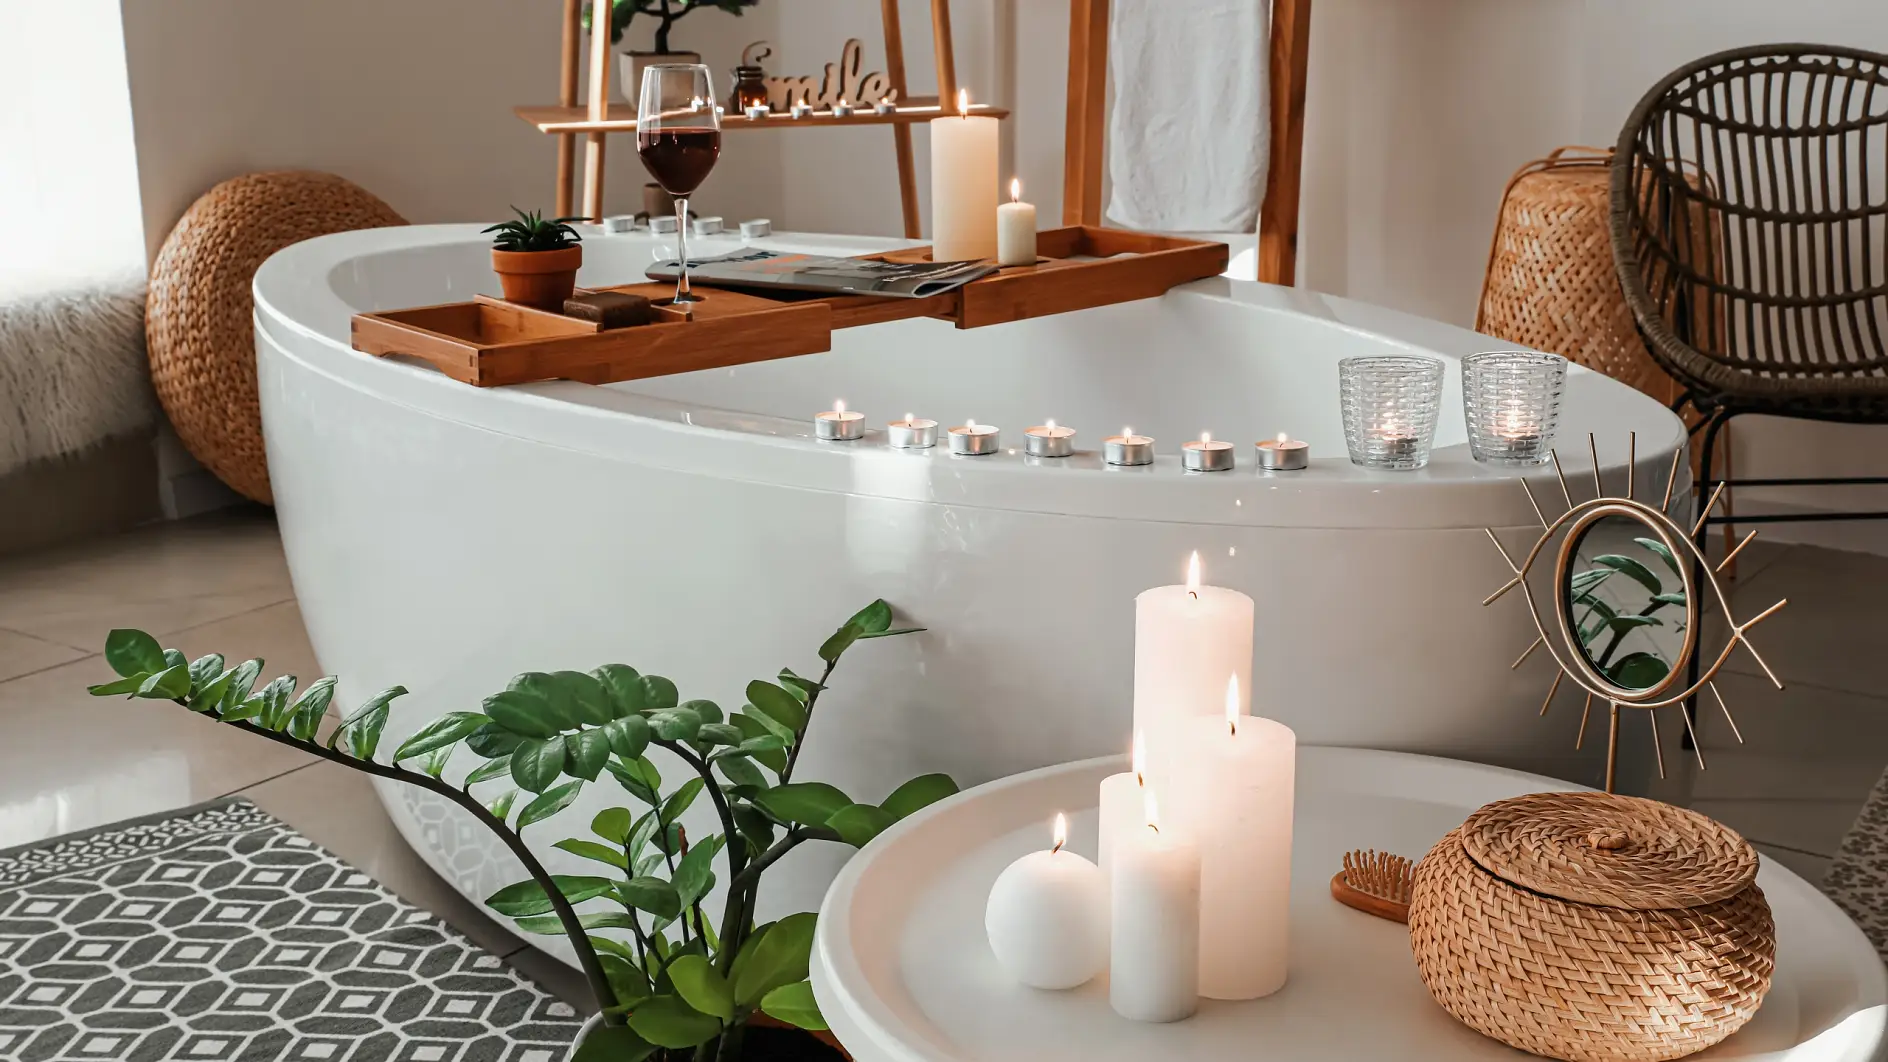 Stylish interior of modern bathroom with burning candles